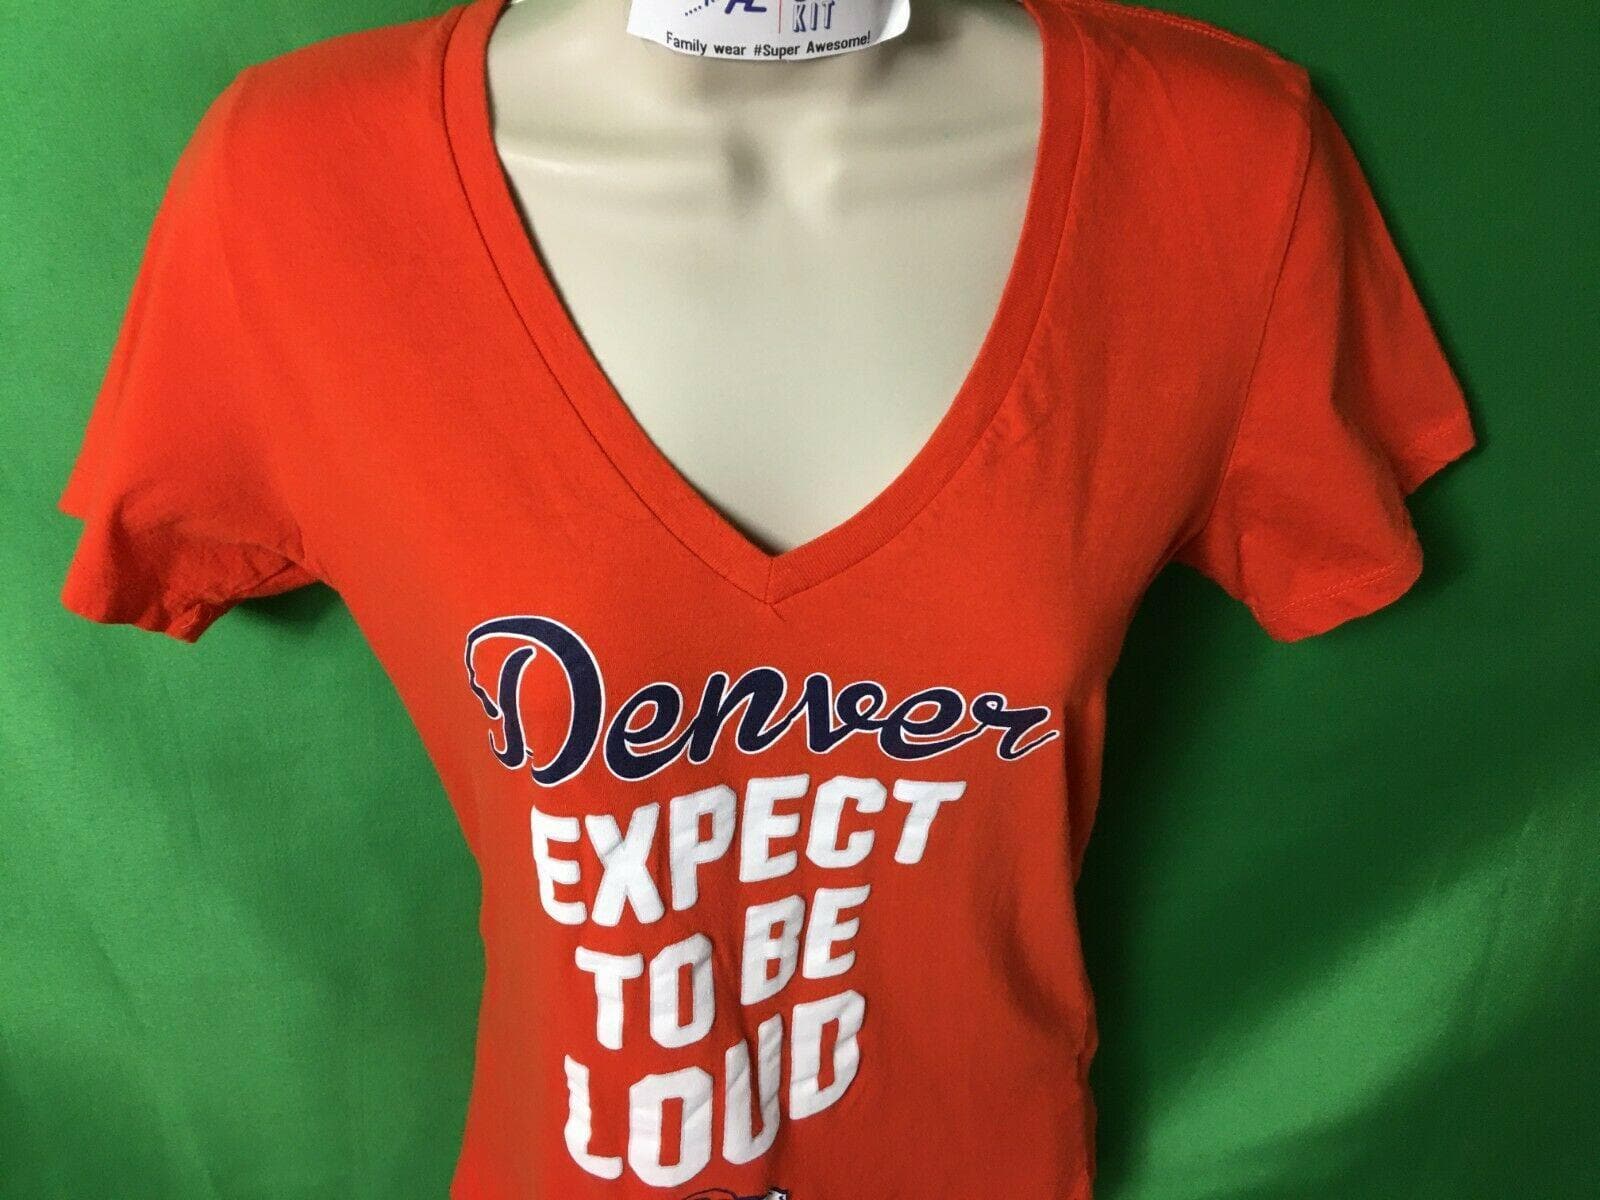 NFL Denver Broncos "Expect to be Loud" T-Shirt Women's Medium